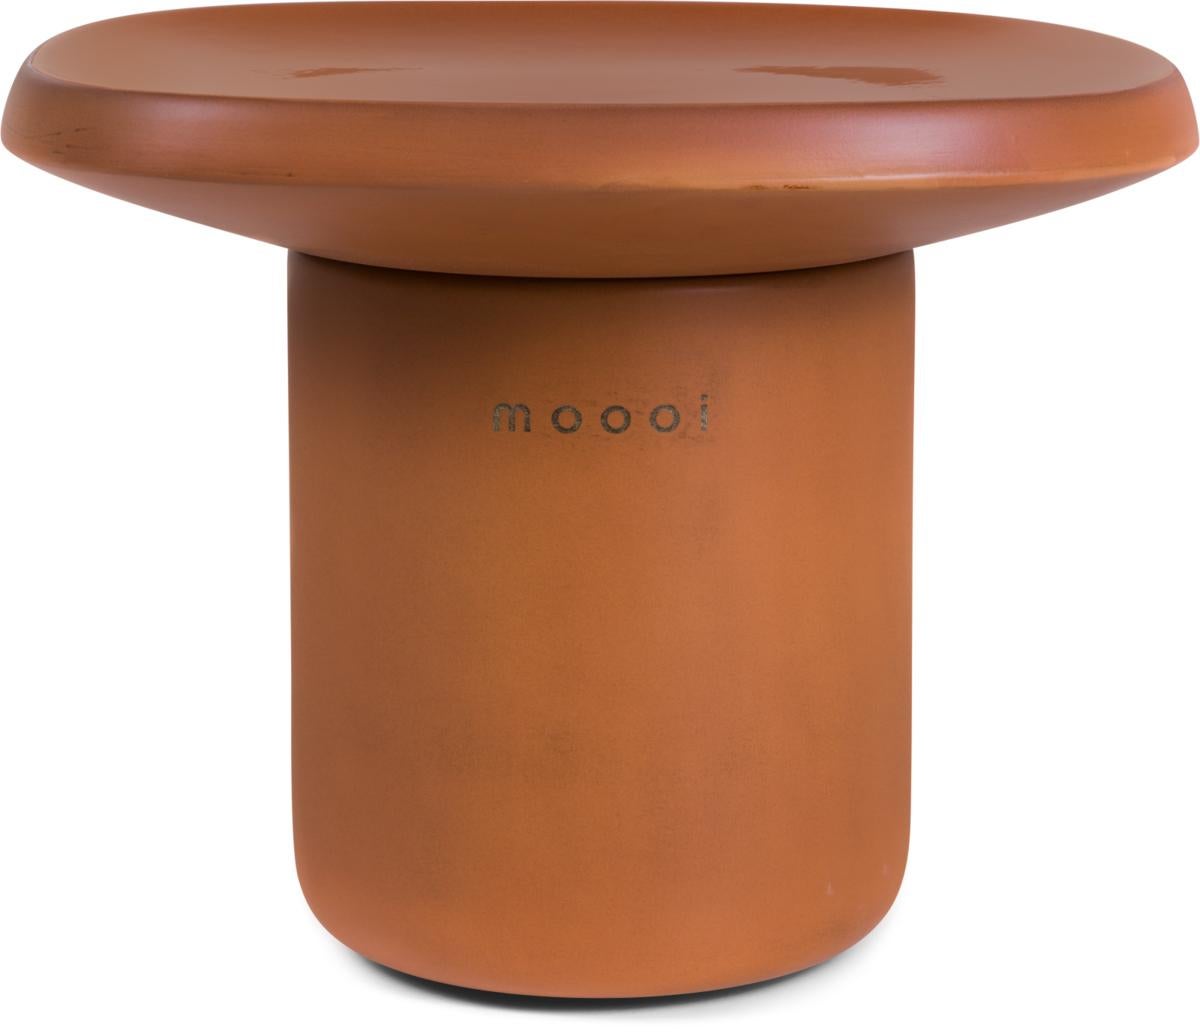 Moooi Obon Square High Ceramic Table in Grey Finish by Simone Bonanni For Sale 3